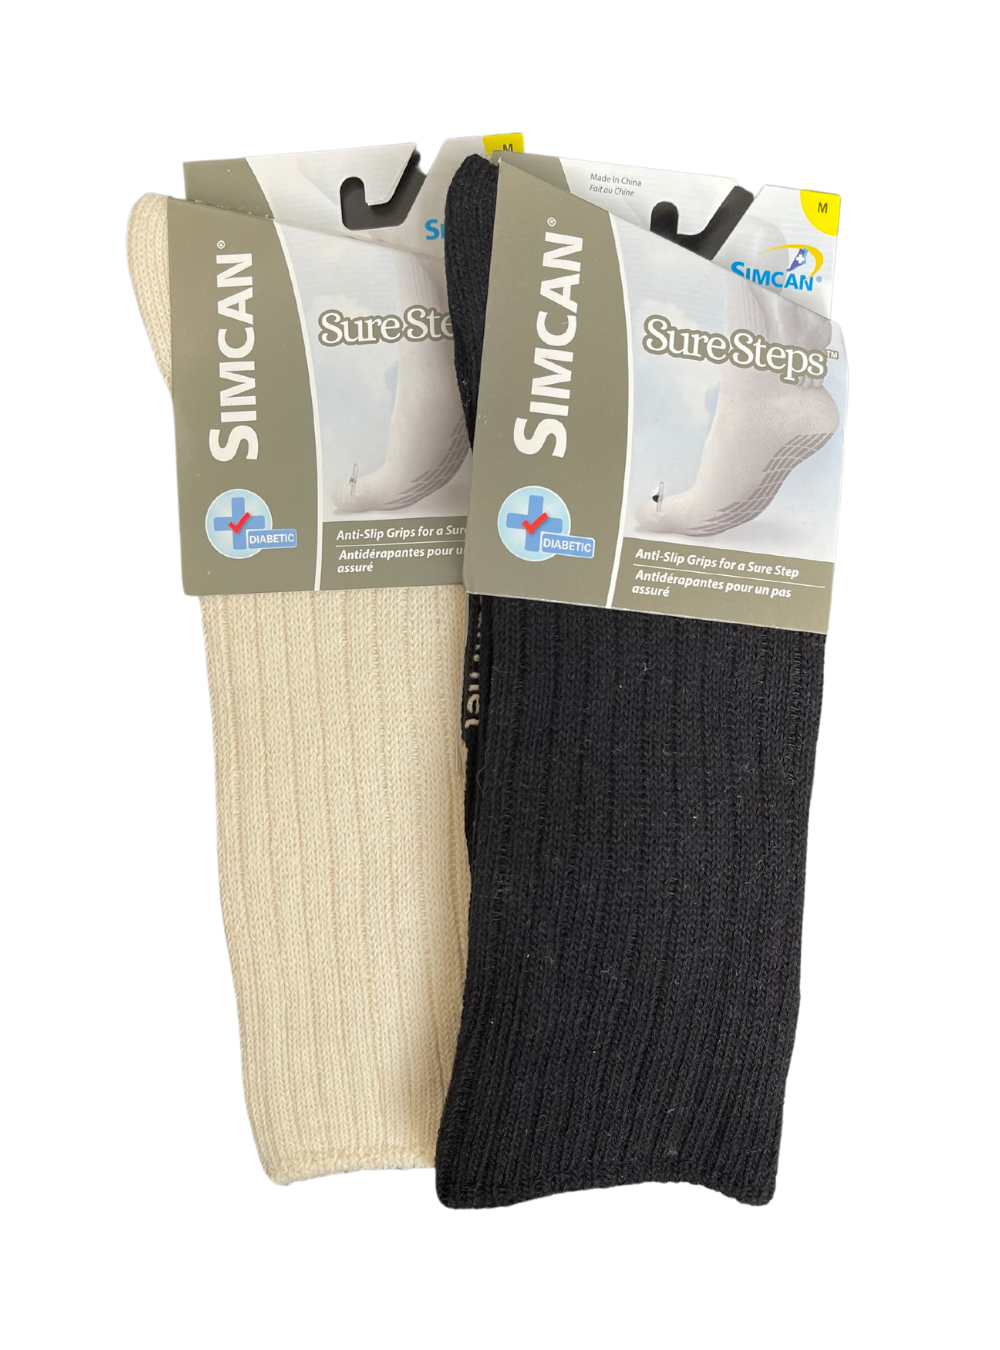 Diabetic Socks with Grips for Women & Men